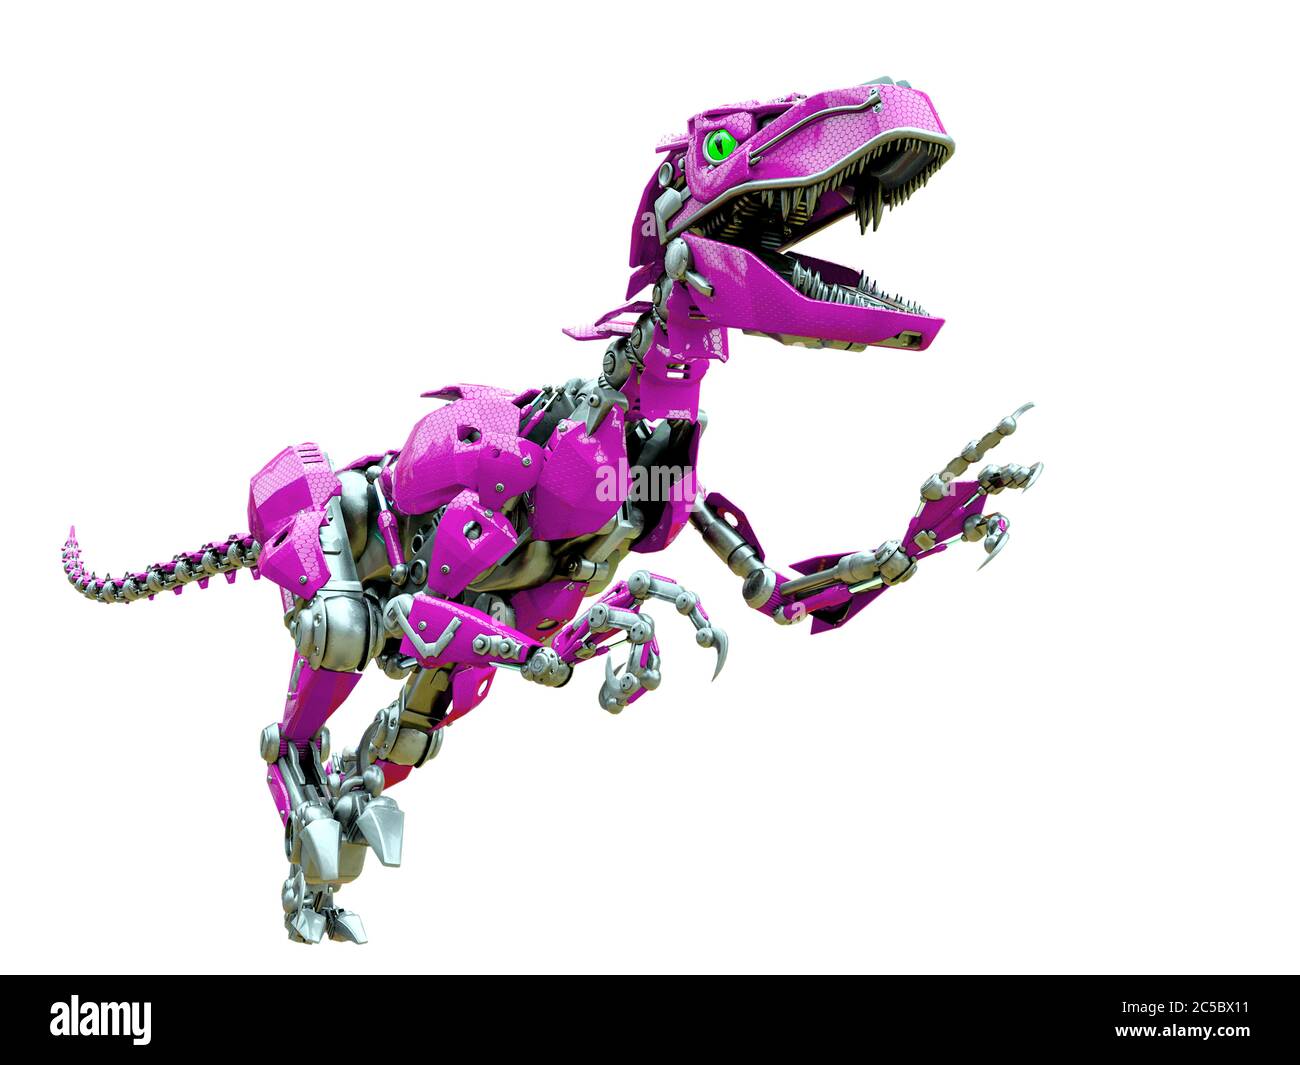 Dinosaurio robot Imágenes recortadas de stock - Alamy